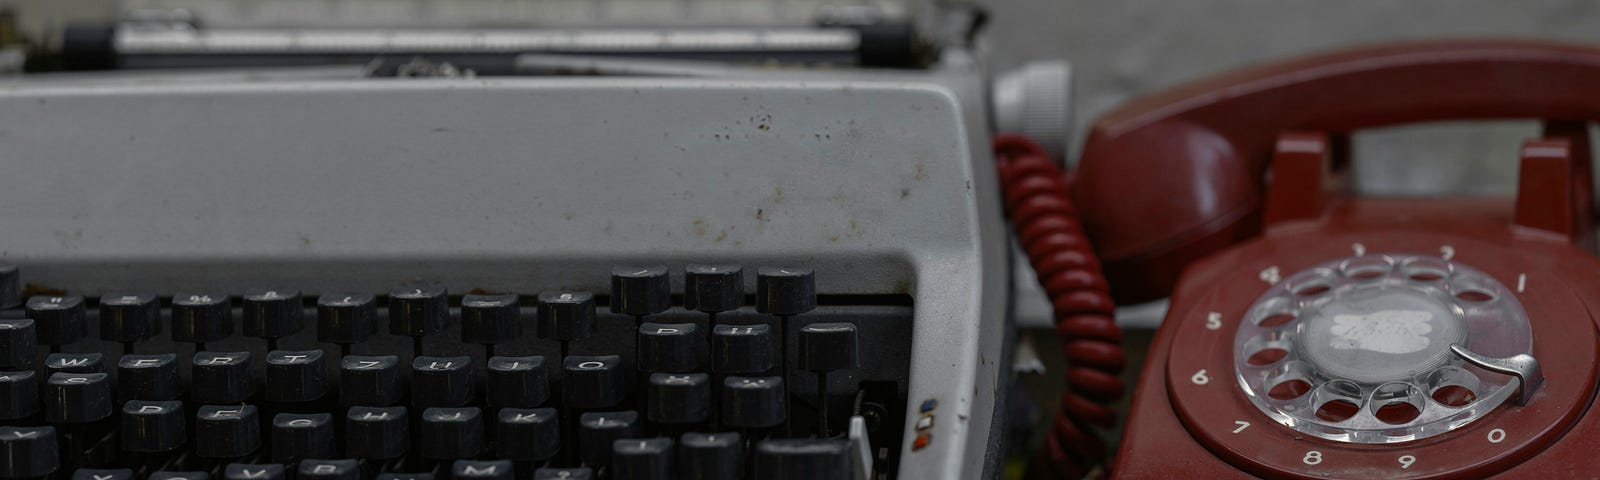 Old typewriter and phone